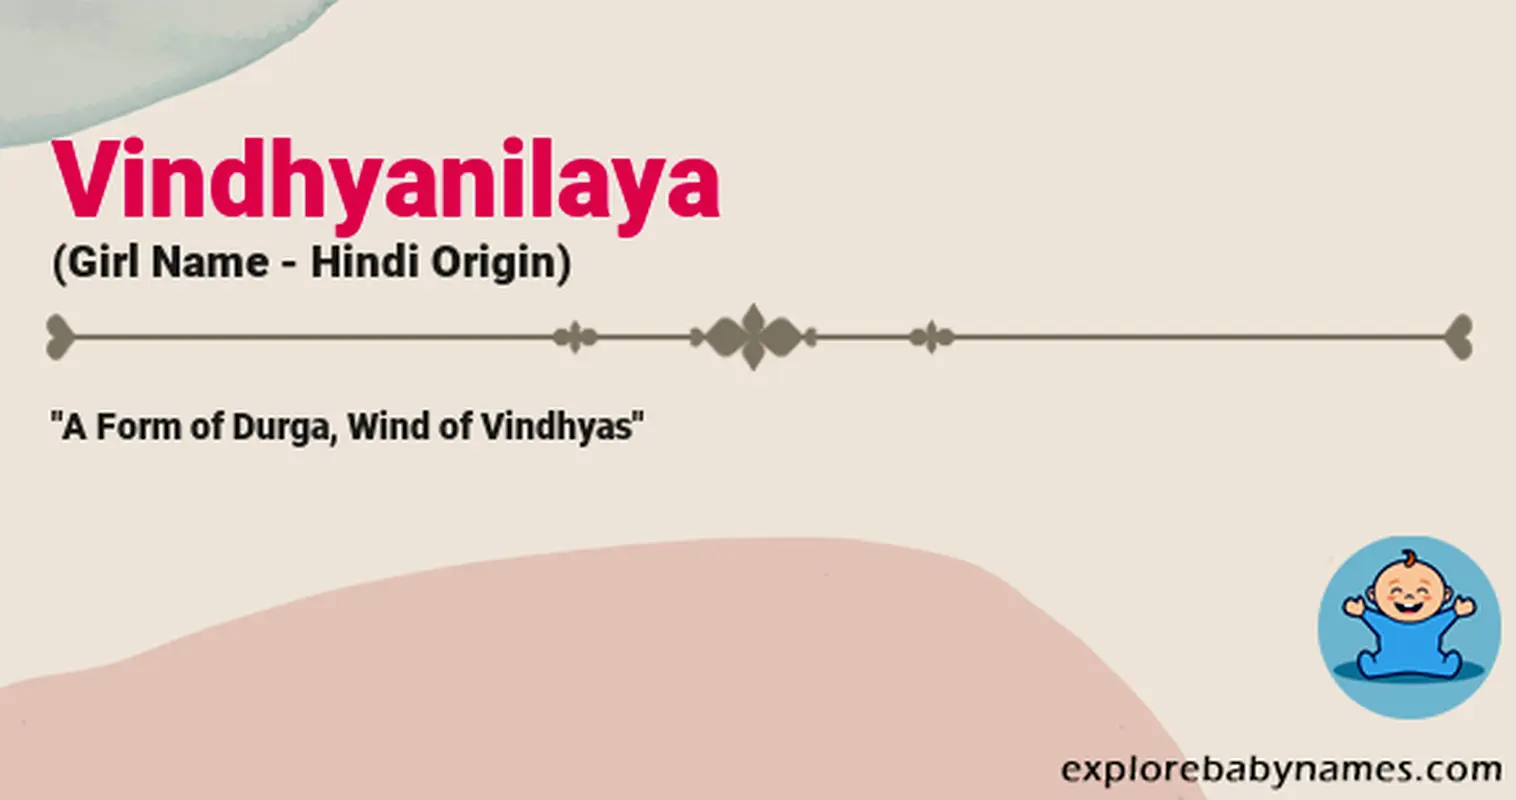 Meaning of Vindhyanilaya